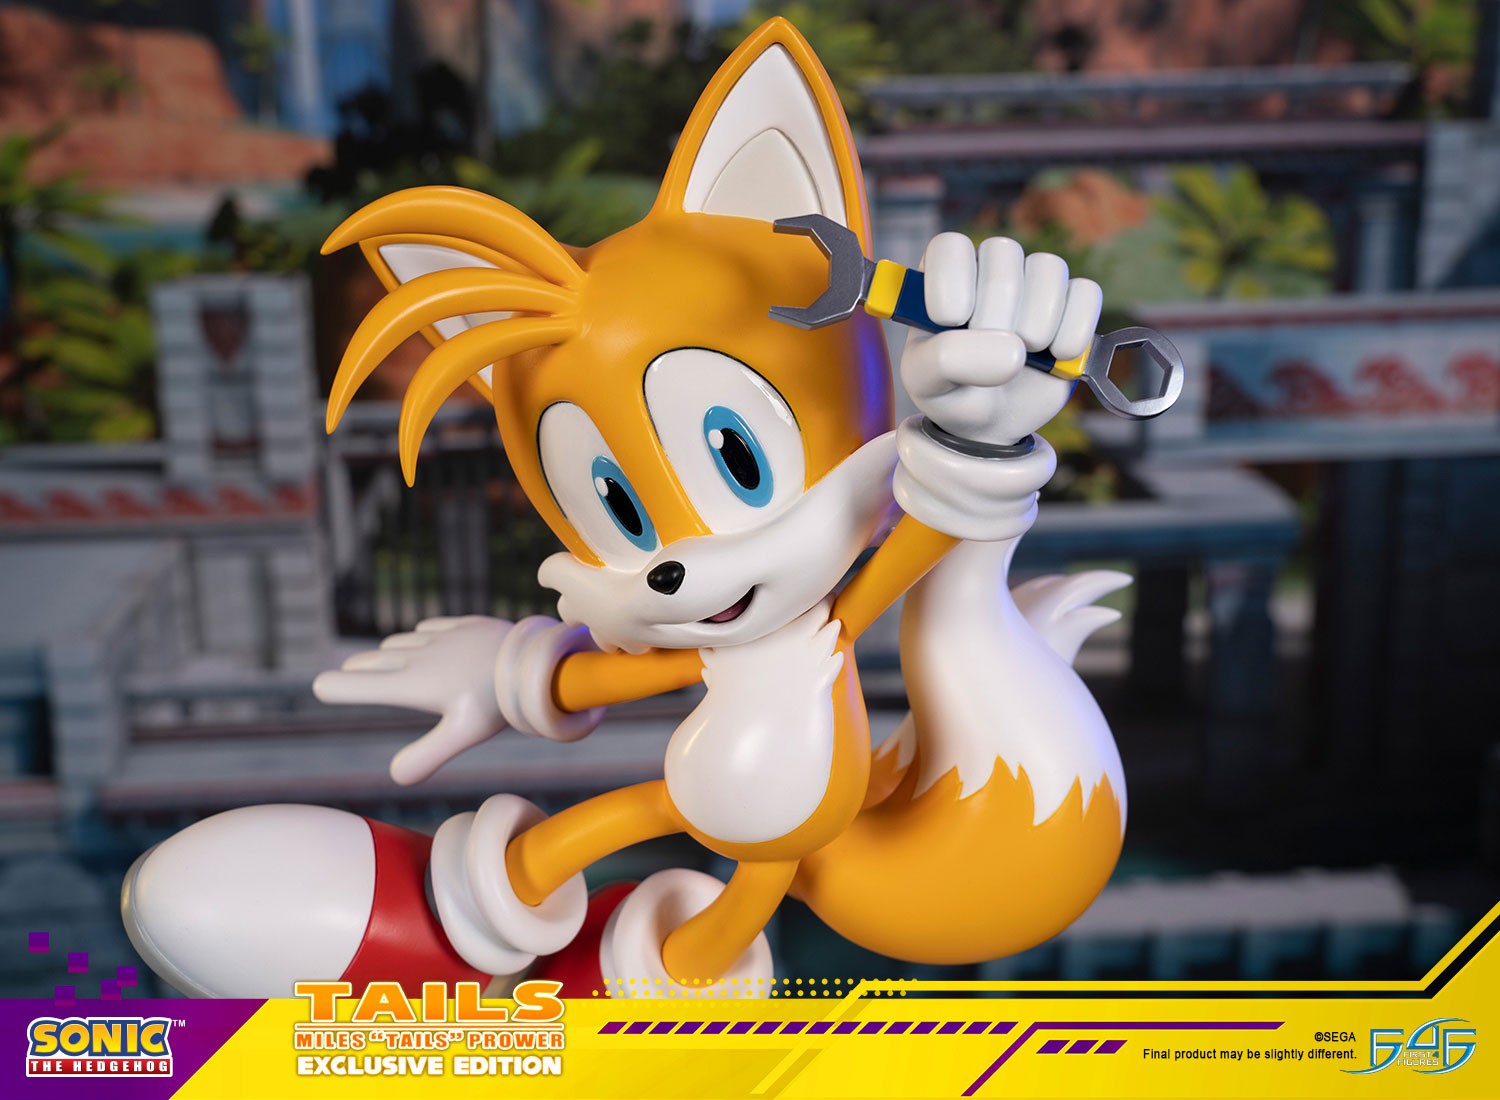 FIRST 4 FIGURES] Sonic the Hedgehog: Tails Statue :: Grandes Coleções